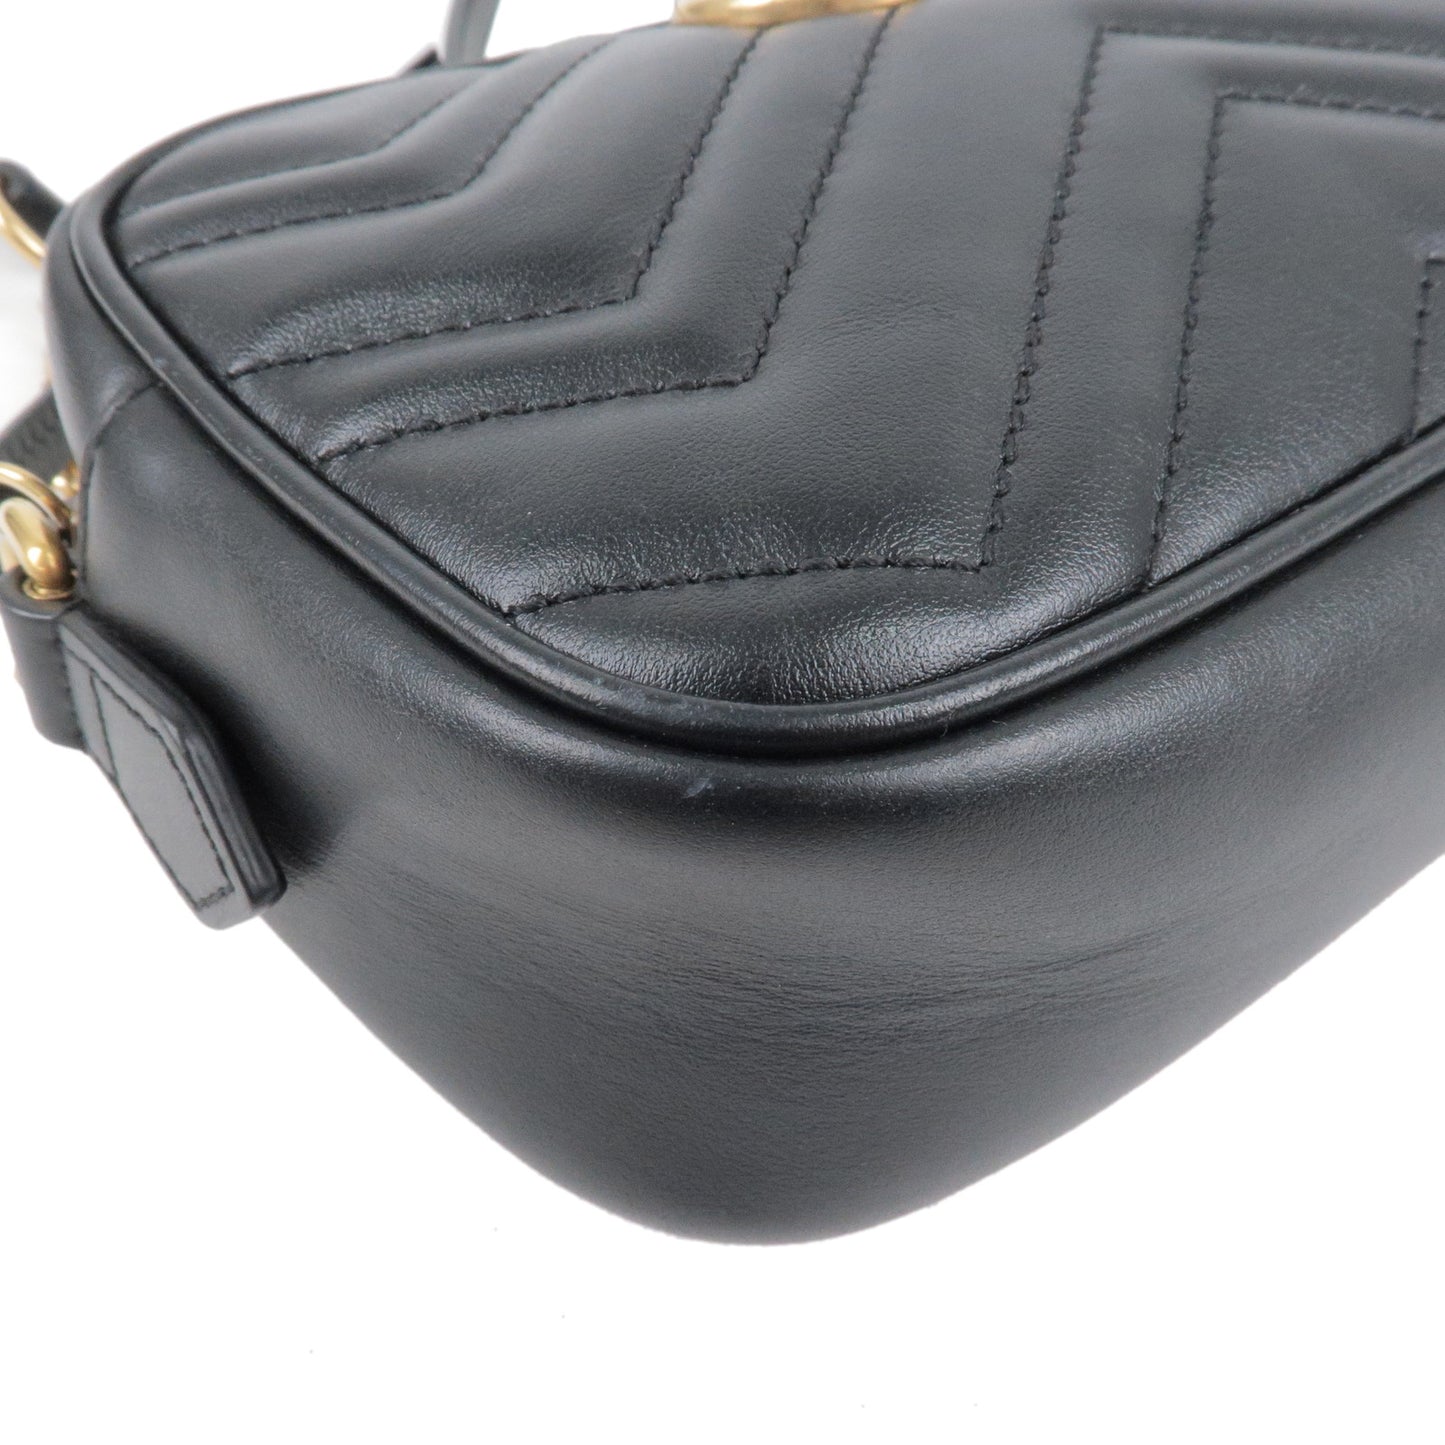 GUCCI GG Marmont Leather Chain Shoulder Bag Black 448065